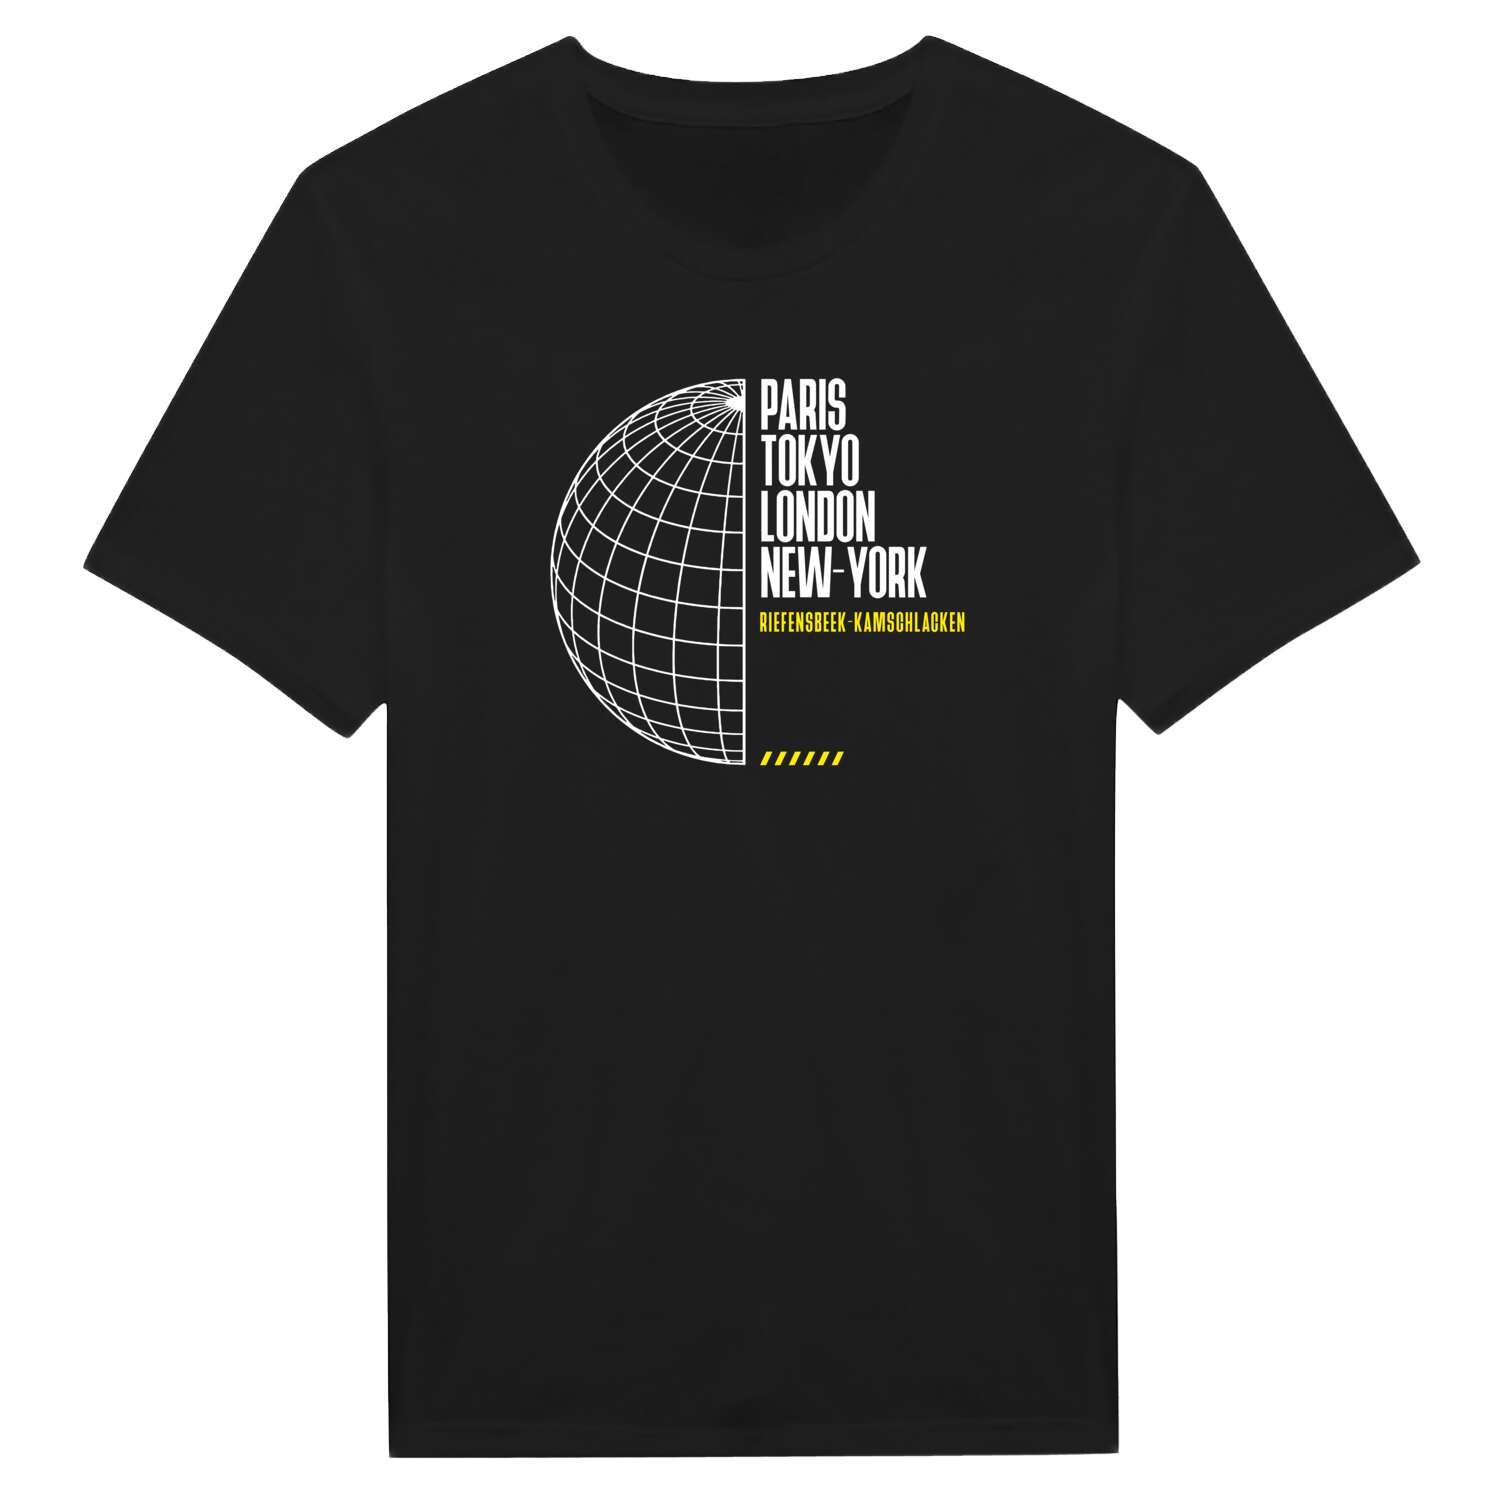 Riefensbeek-Kamschlacken T-Shirt »Paris Tokyo London«